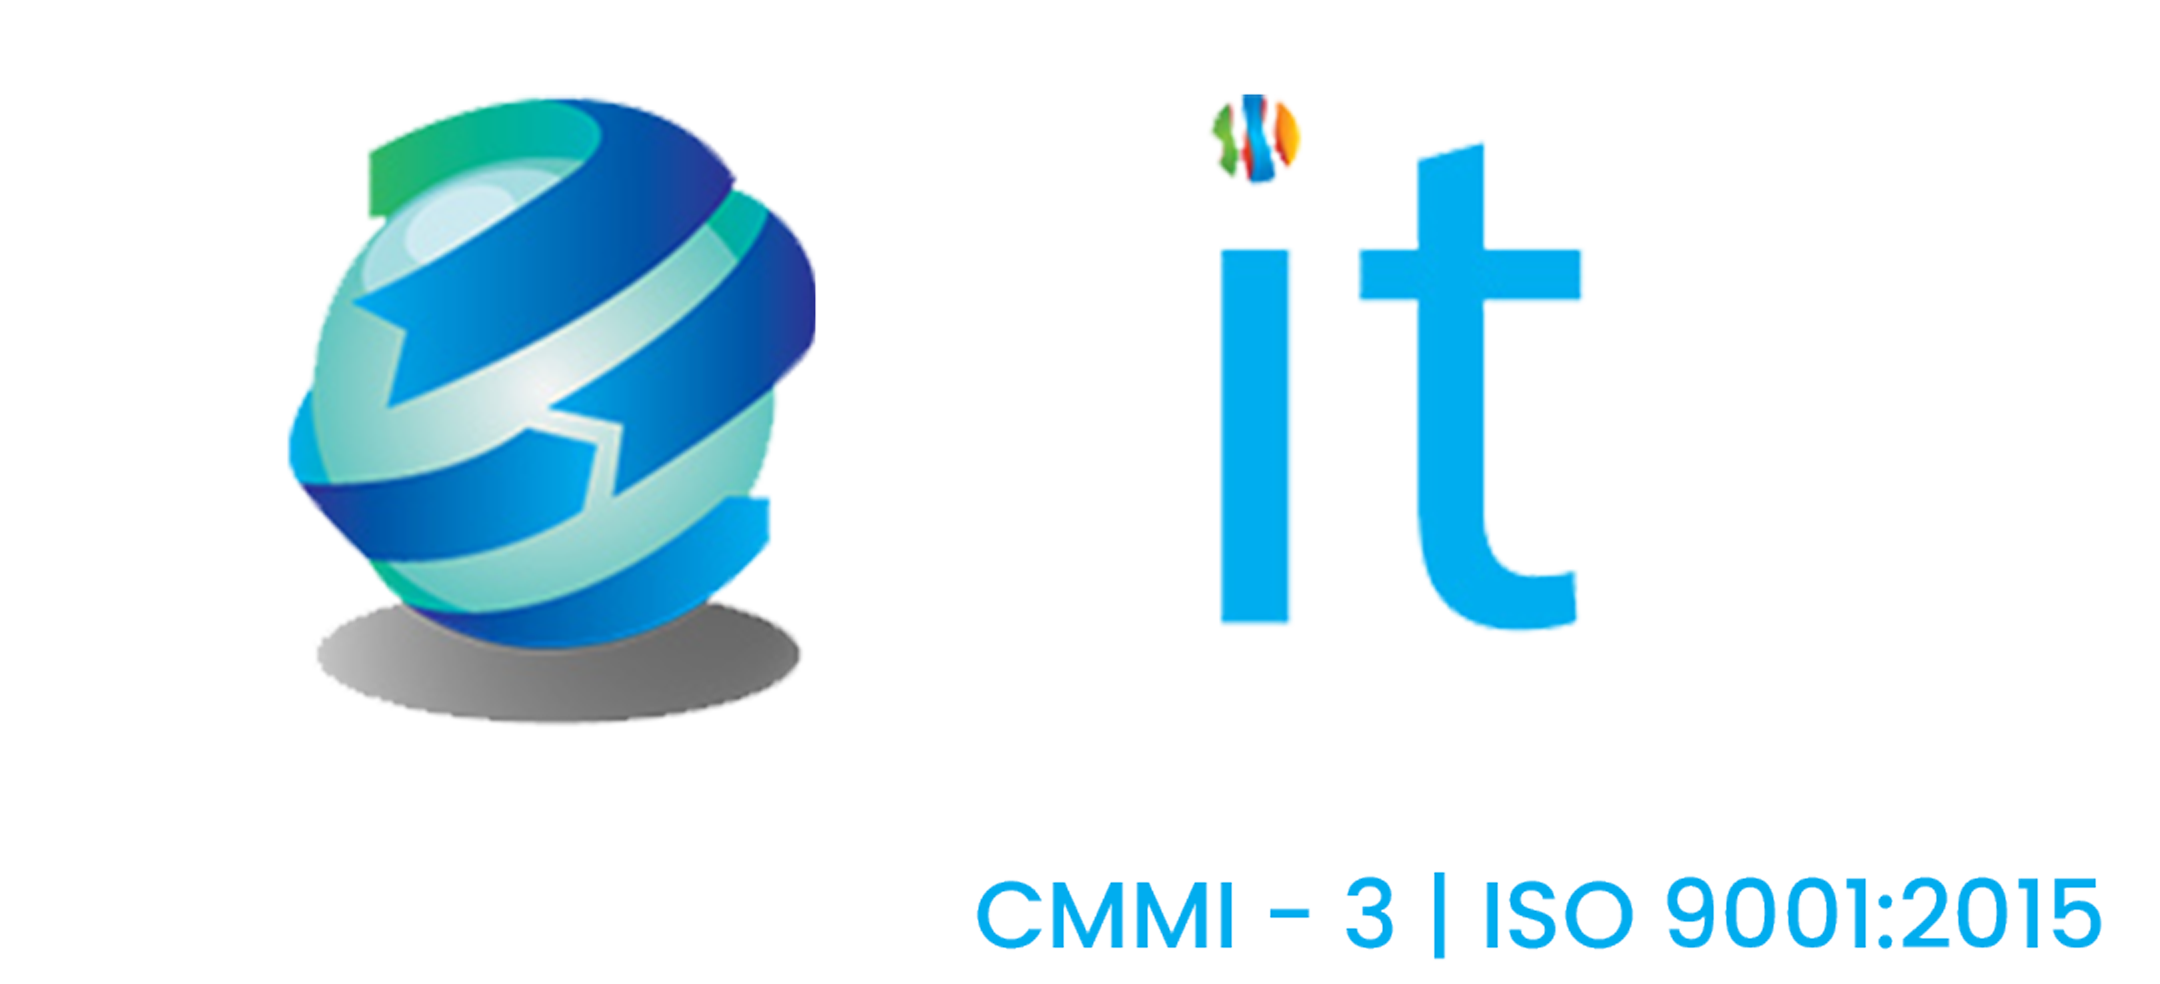 Aculance-IoT-Applications-Development-Logo